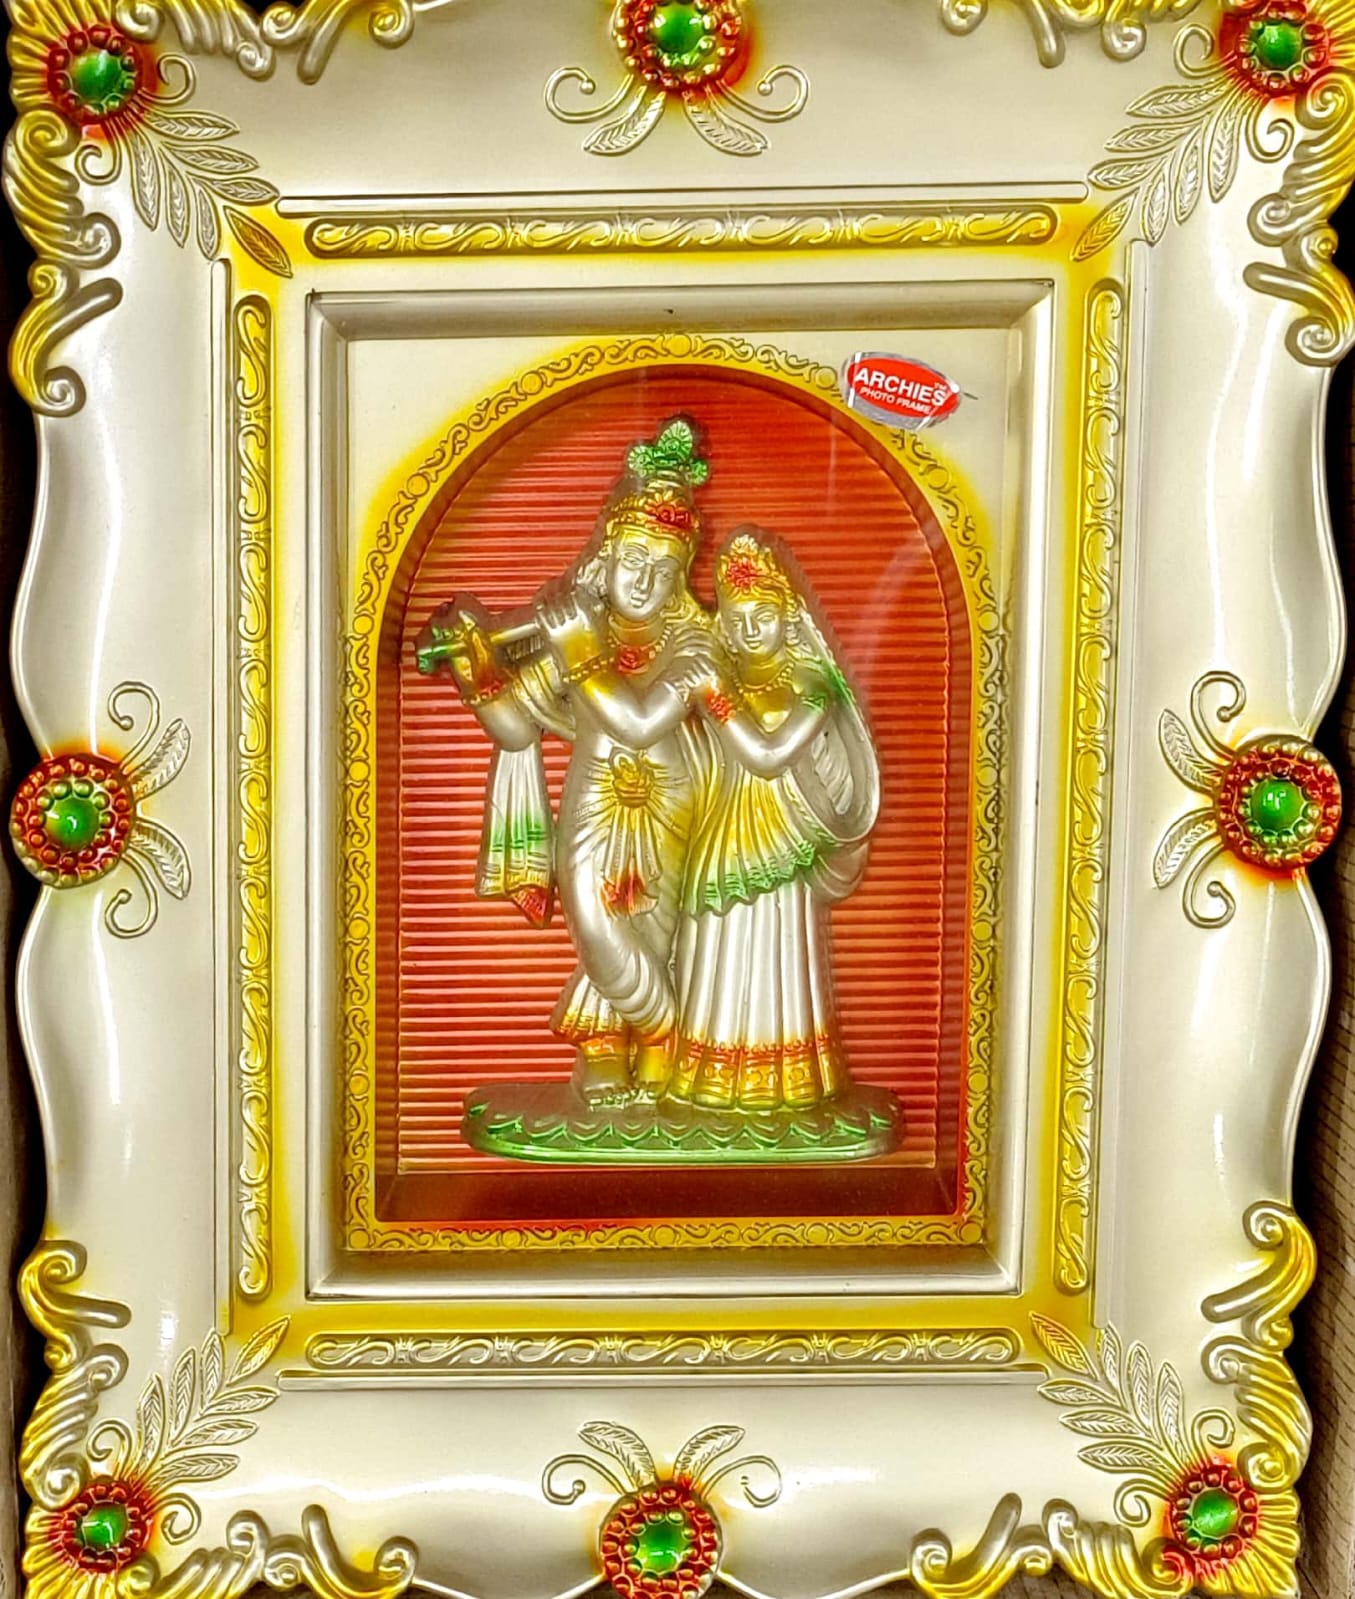 Metal Radha Krishna Statue Gold Plated Decor Your Home,Office & Radha  Krishna Murti Idol Showpiece Figurines,Religious Krishna Idol Gift  Article...